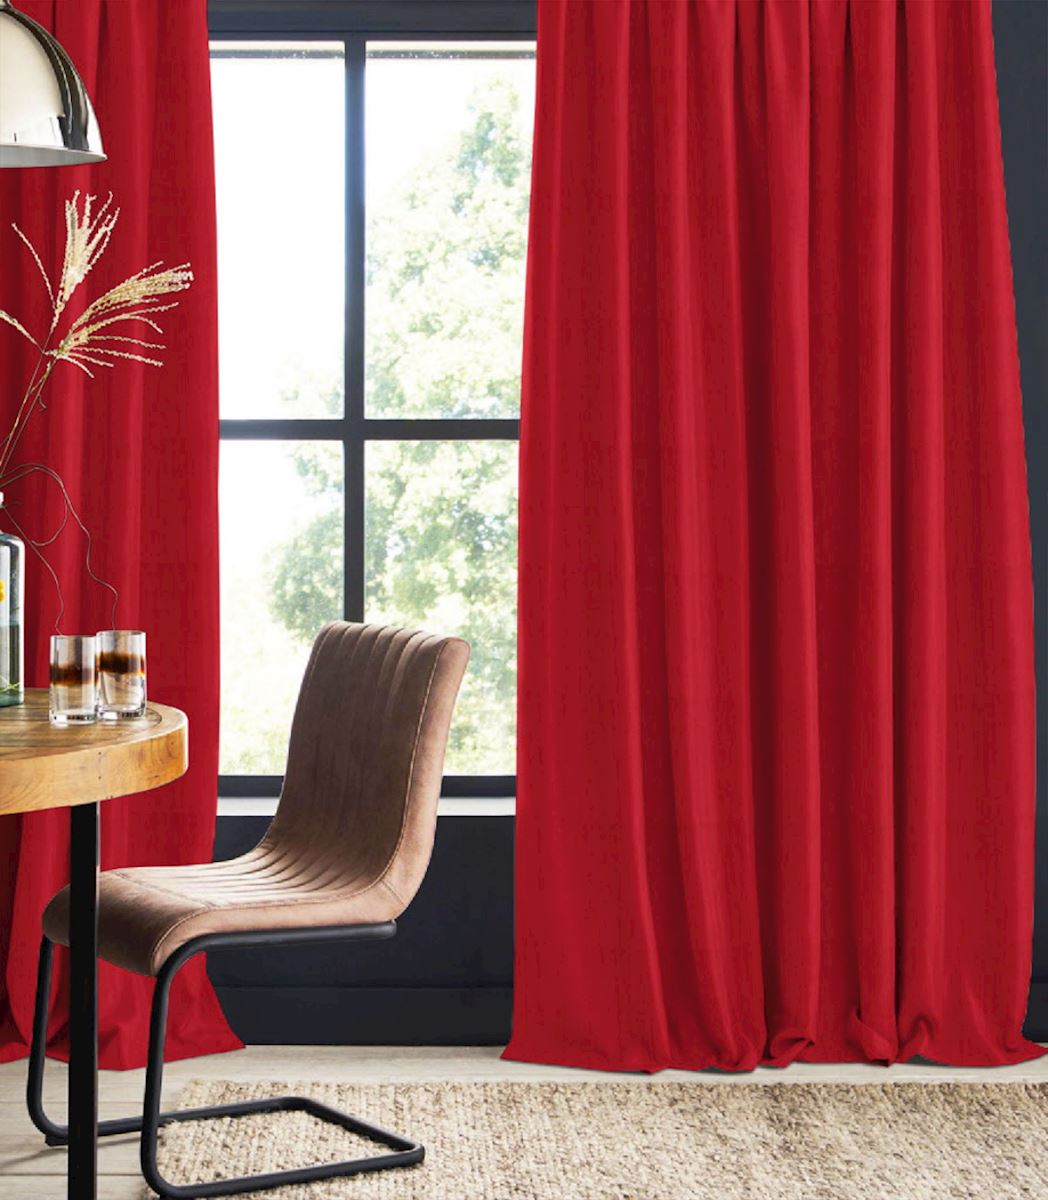 Night curtain red slides